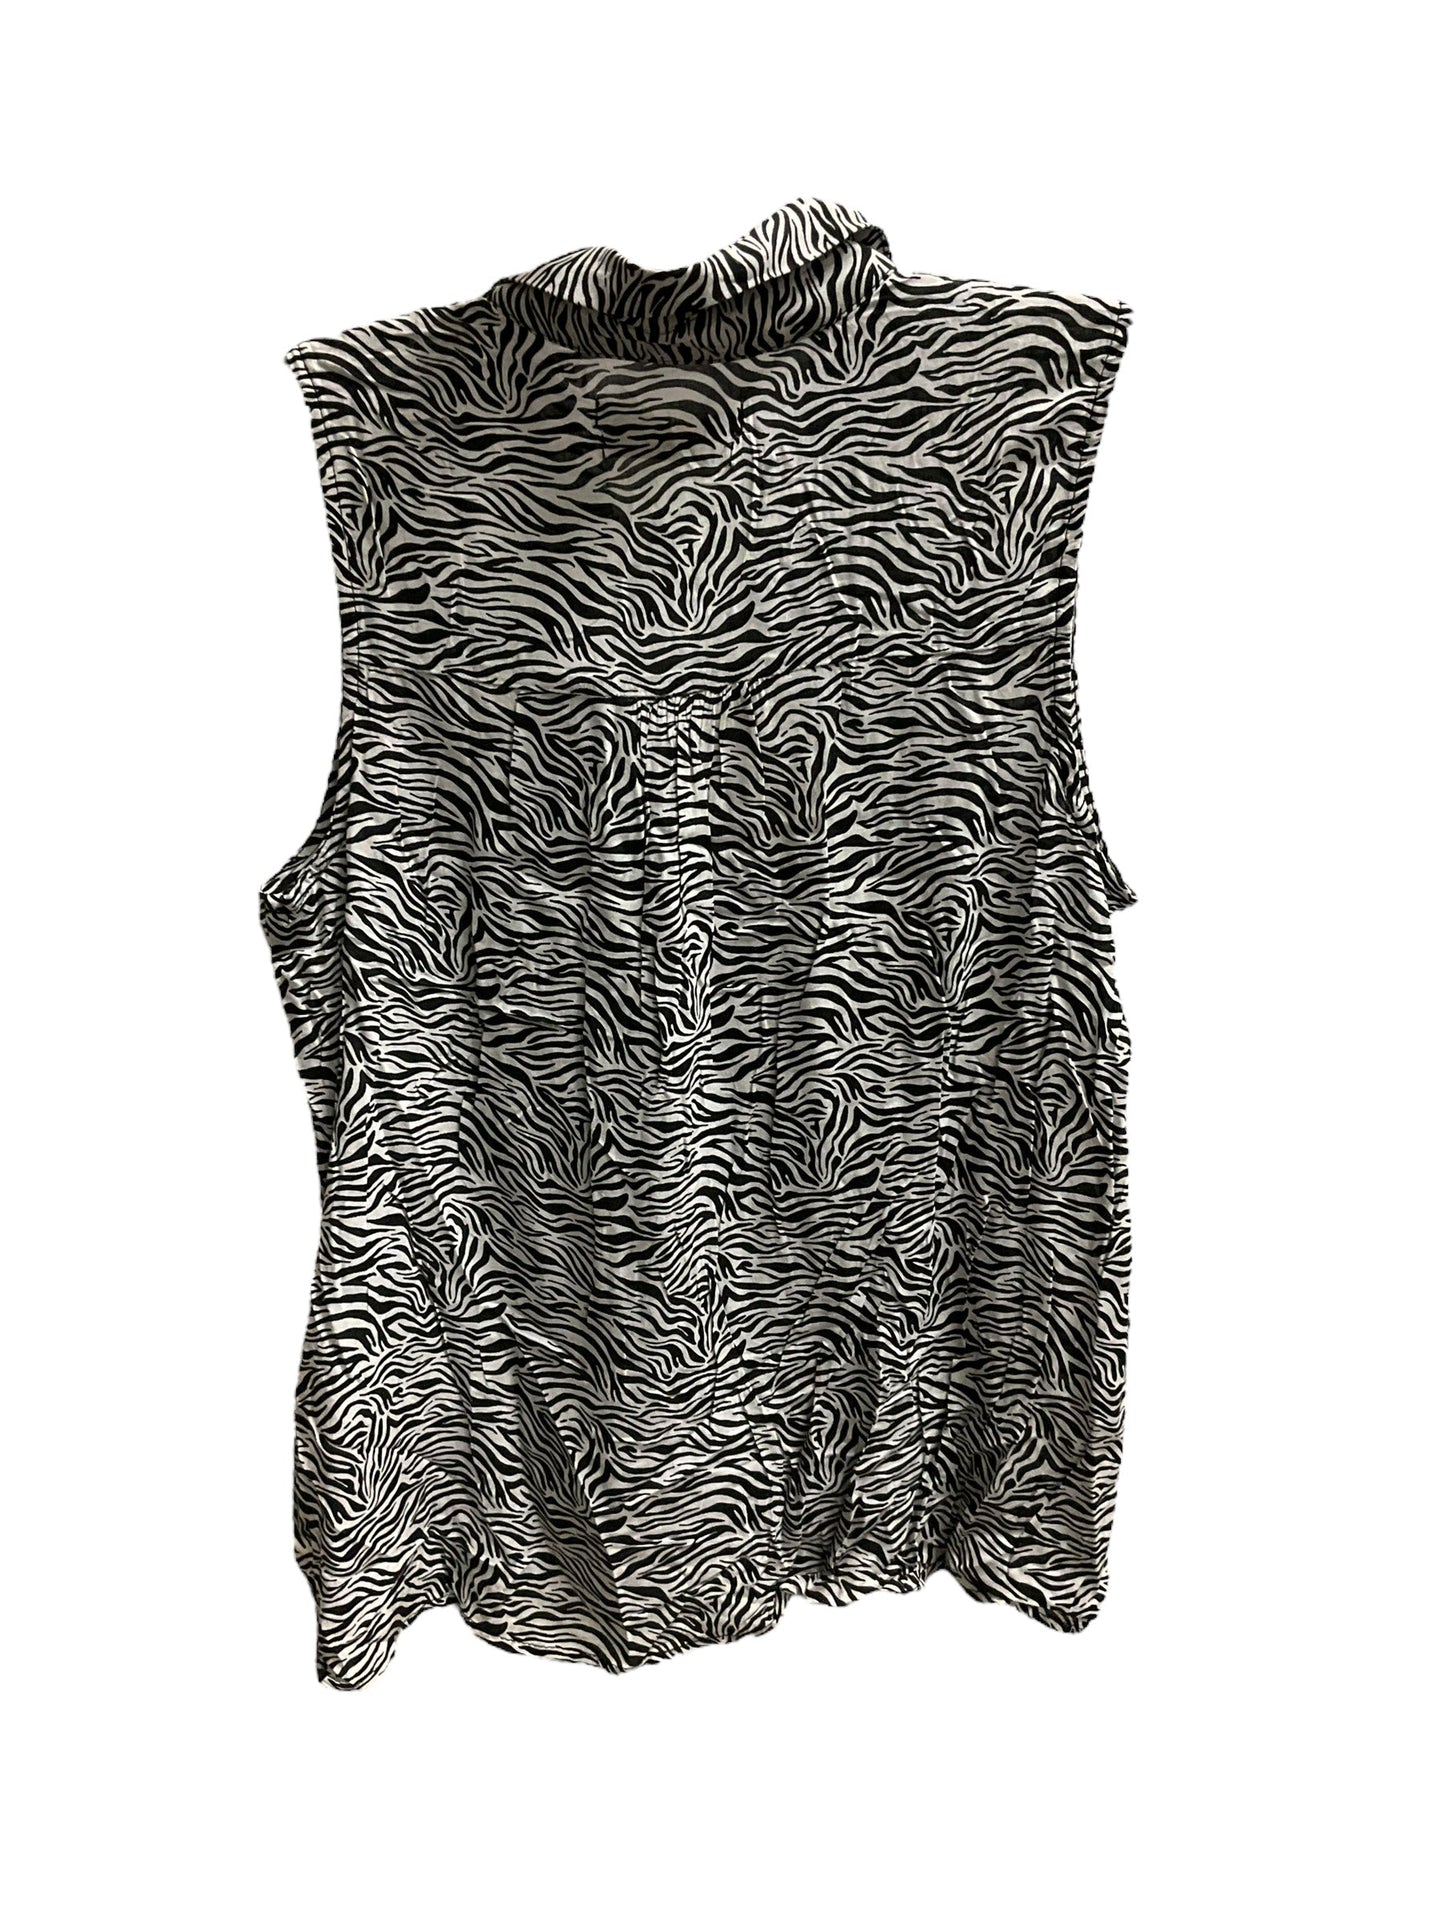 Zebra Print Top Sleeveless Pull & Bear, Size S